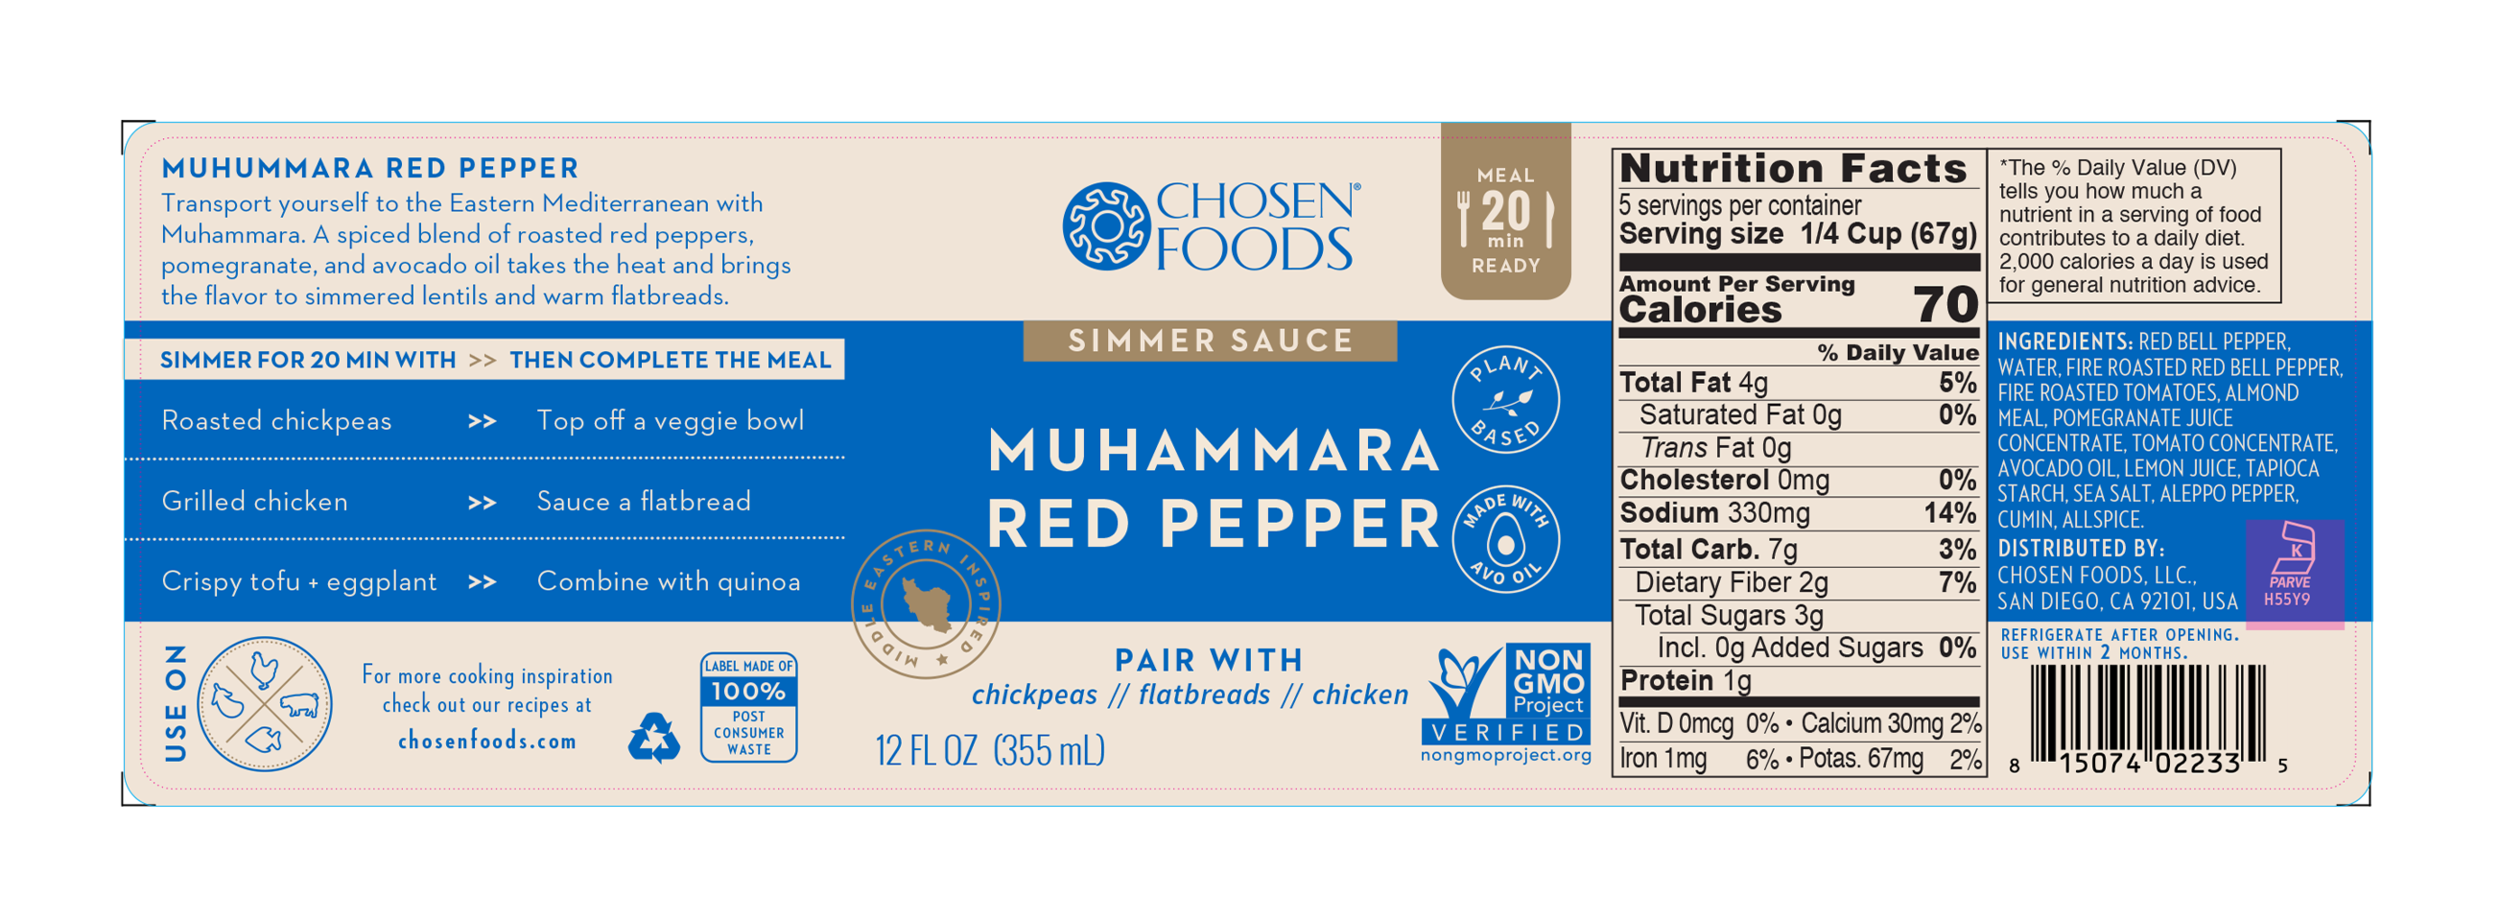 US_Simmer Sauce_Muhummara Red Pepper_12oz Label.png